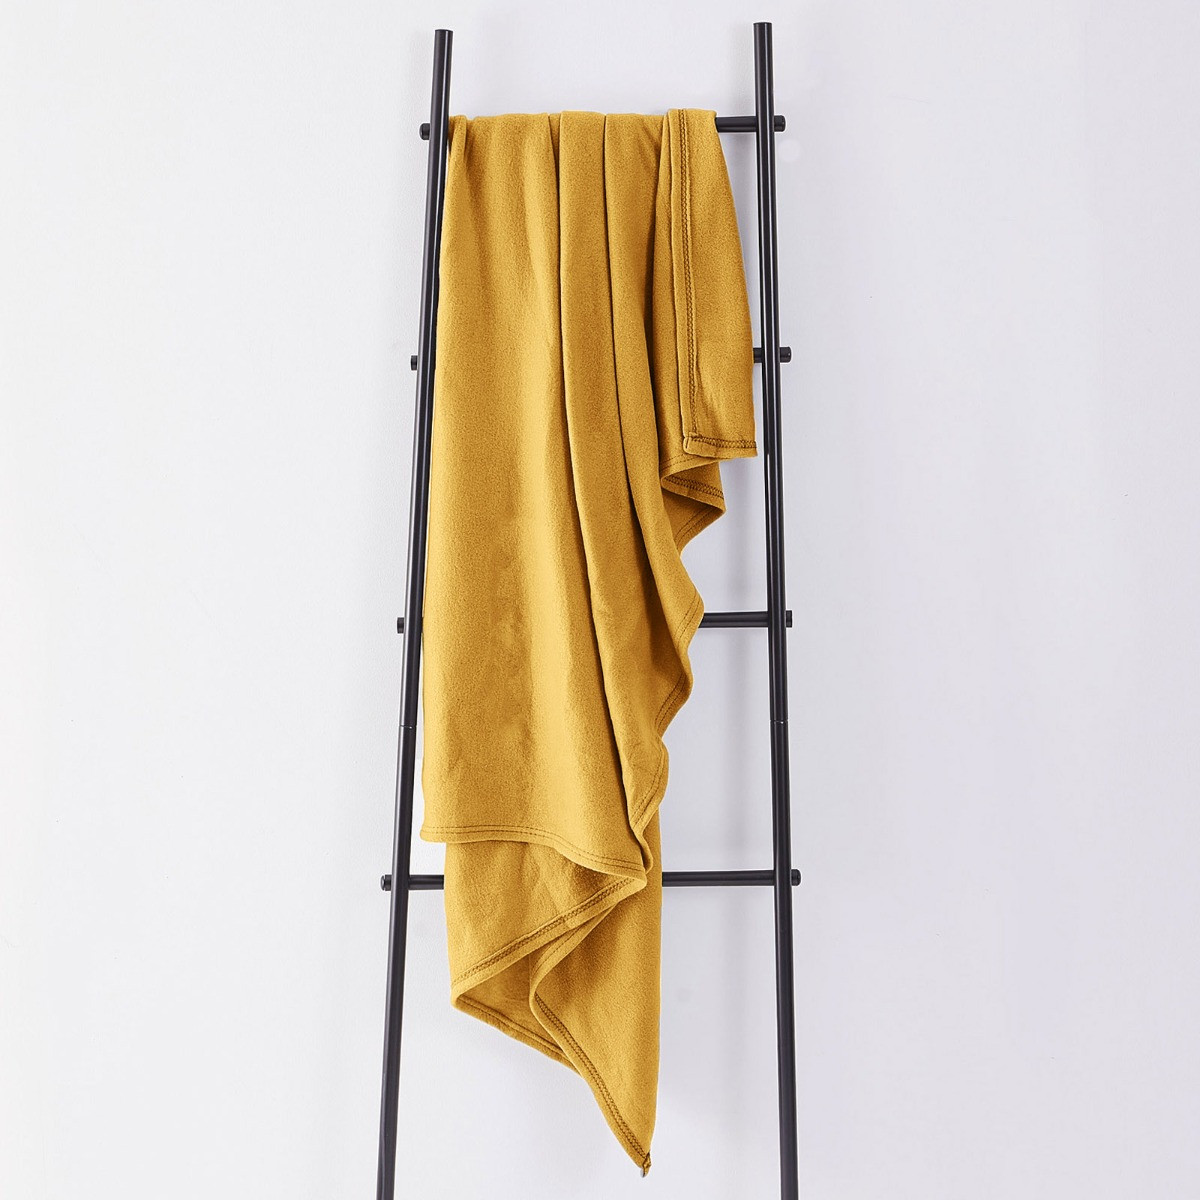 Dreamscene Plain Fleece Throw, Ochre Mustard Yellow - 120 x 150cm>